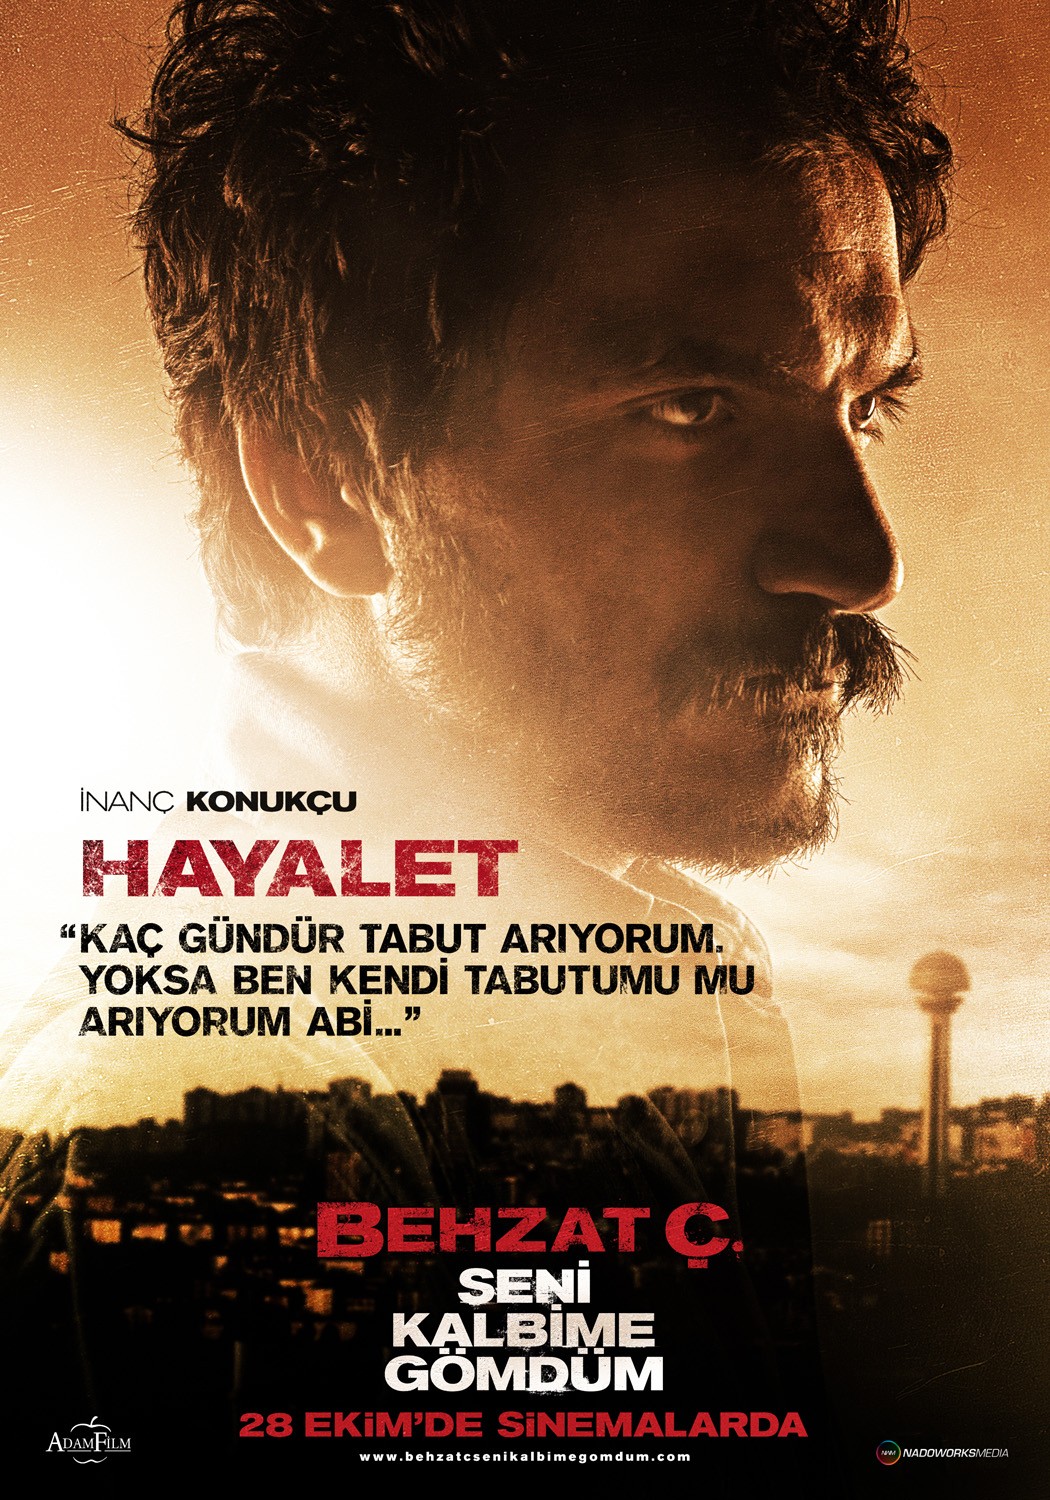 Extra Large Movie Poster Image for Behzat Ç - Seni Kalbime Gömdüm (#6 of 12)